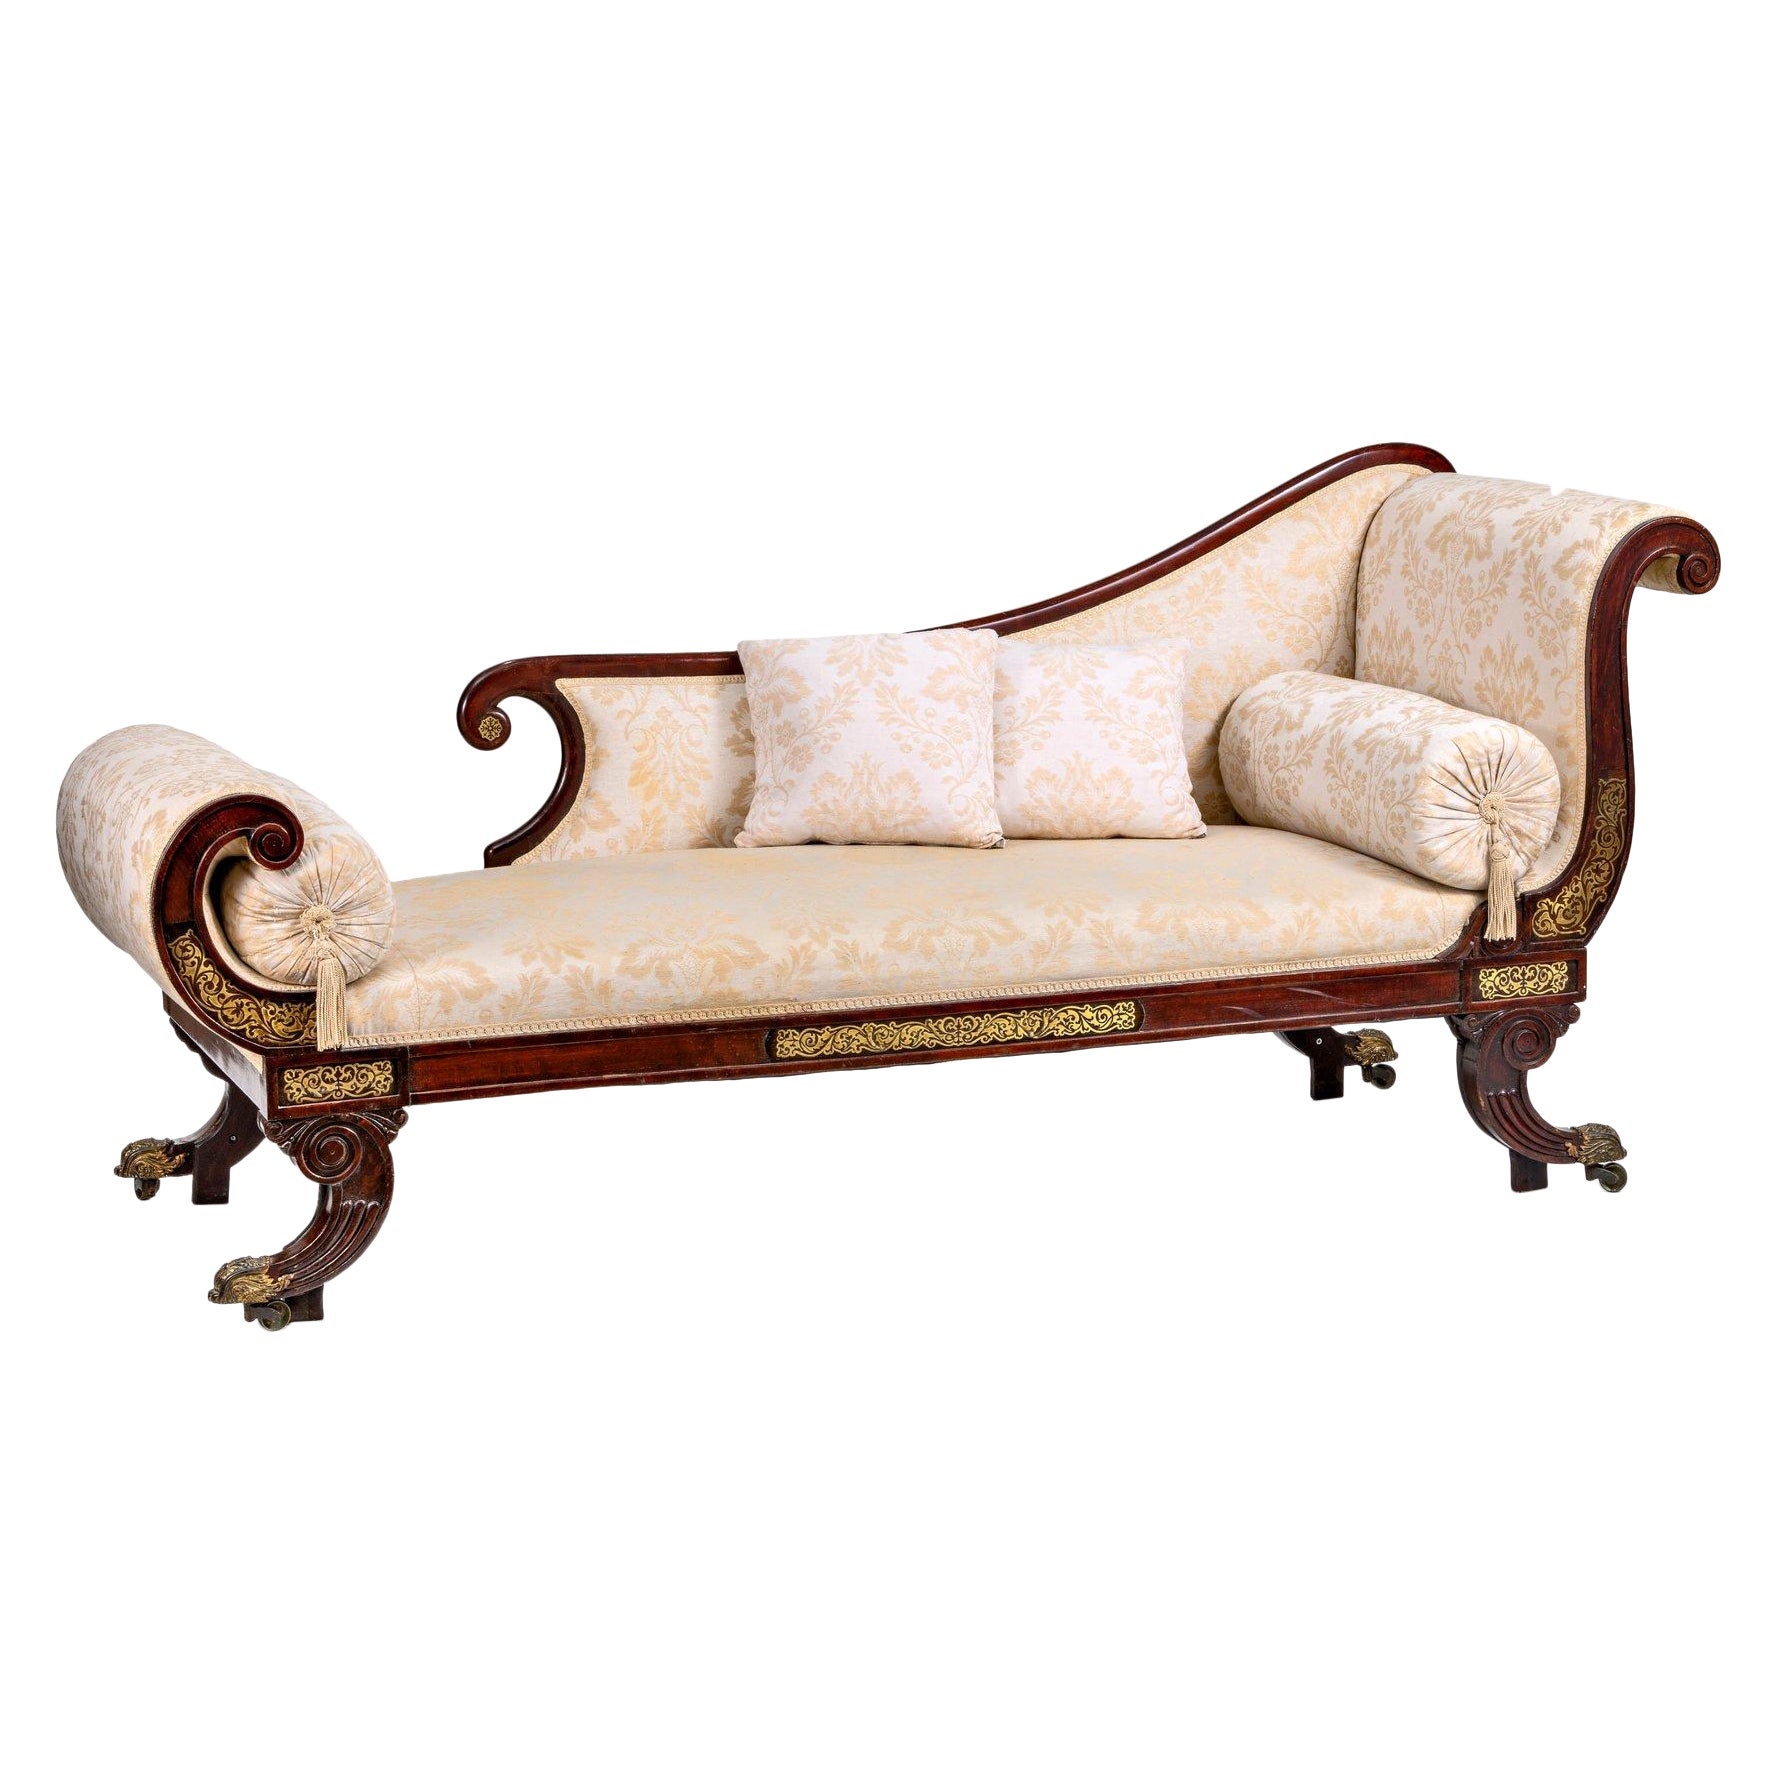 Antique English Chaise Longue/ Recamiere, Mahogany, Arround 1830 For Sale